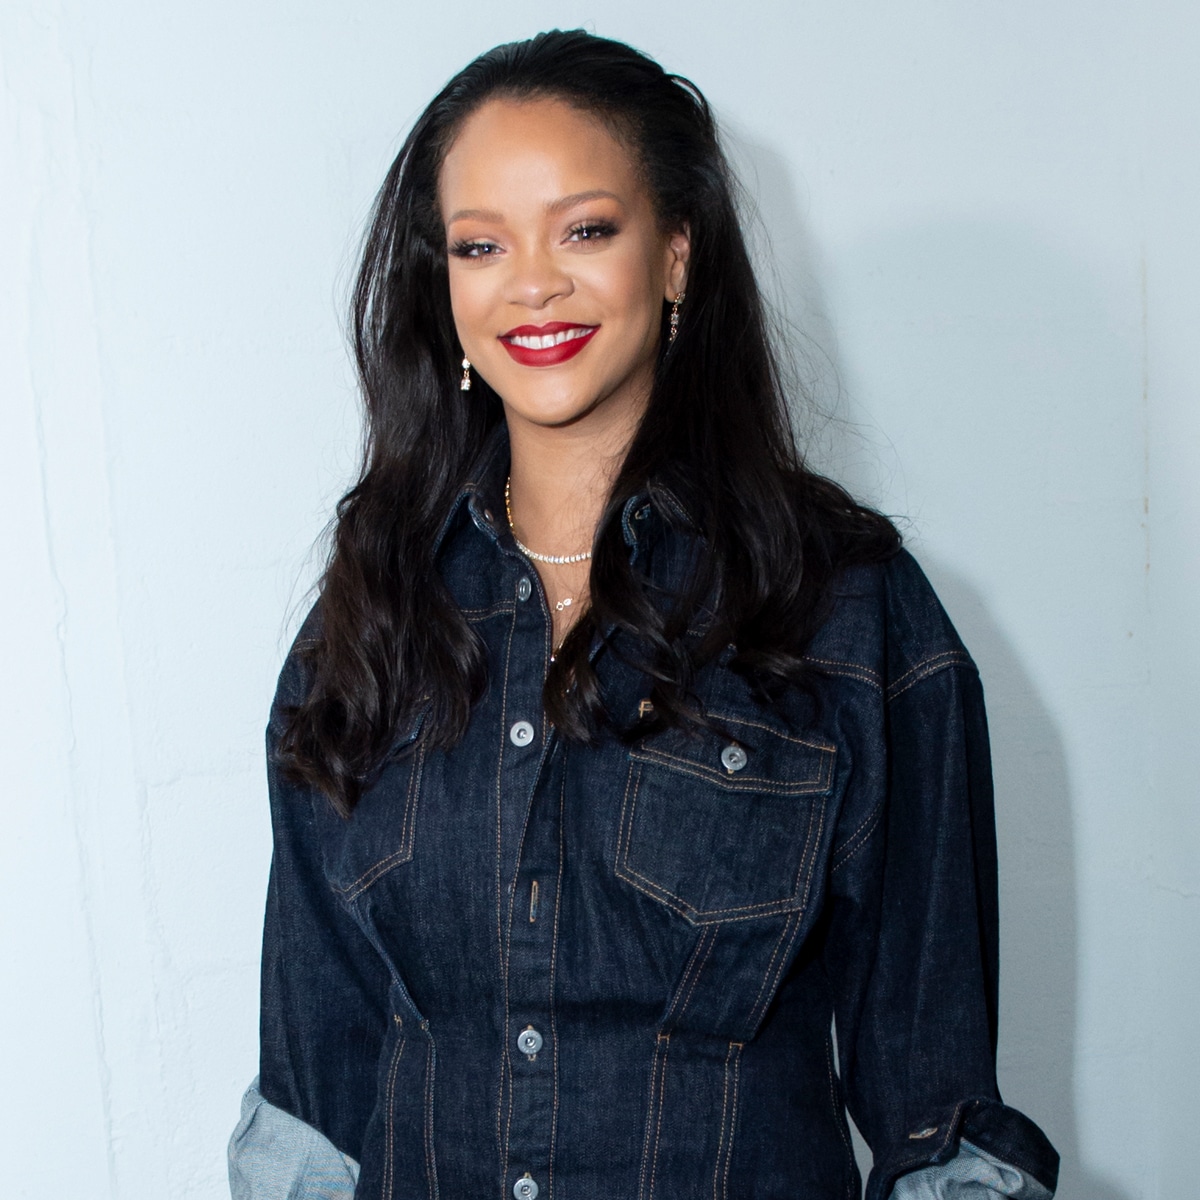 Butt-Baring Leggings From Rihanna's Savage x Fenty Line Spark Debate